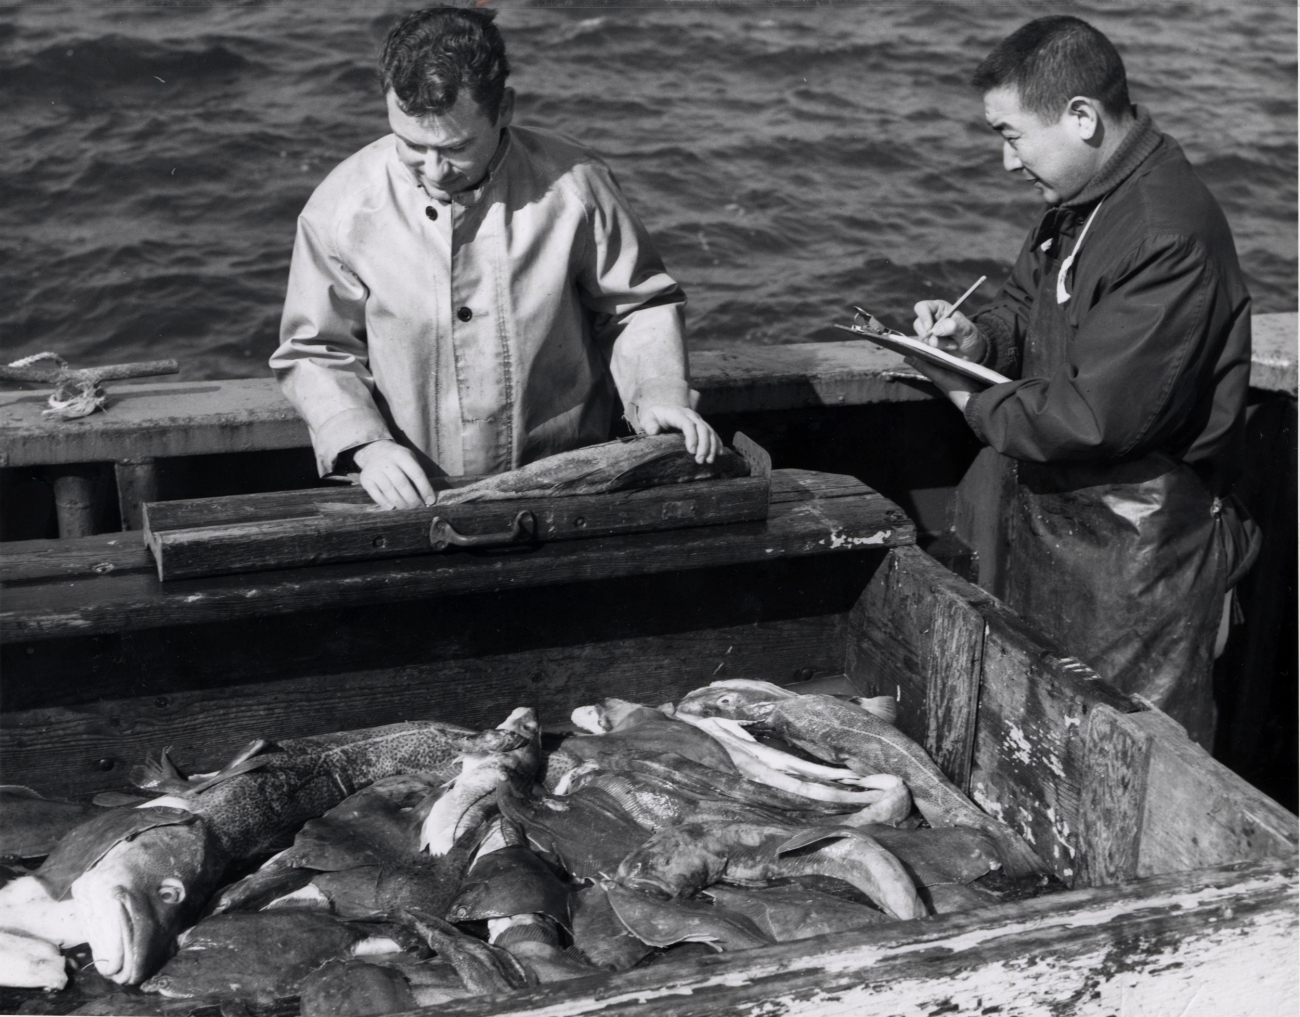 Biologists measuring cod fish at sea